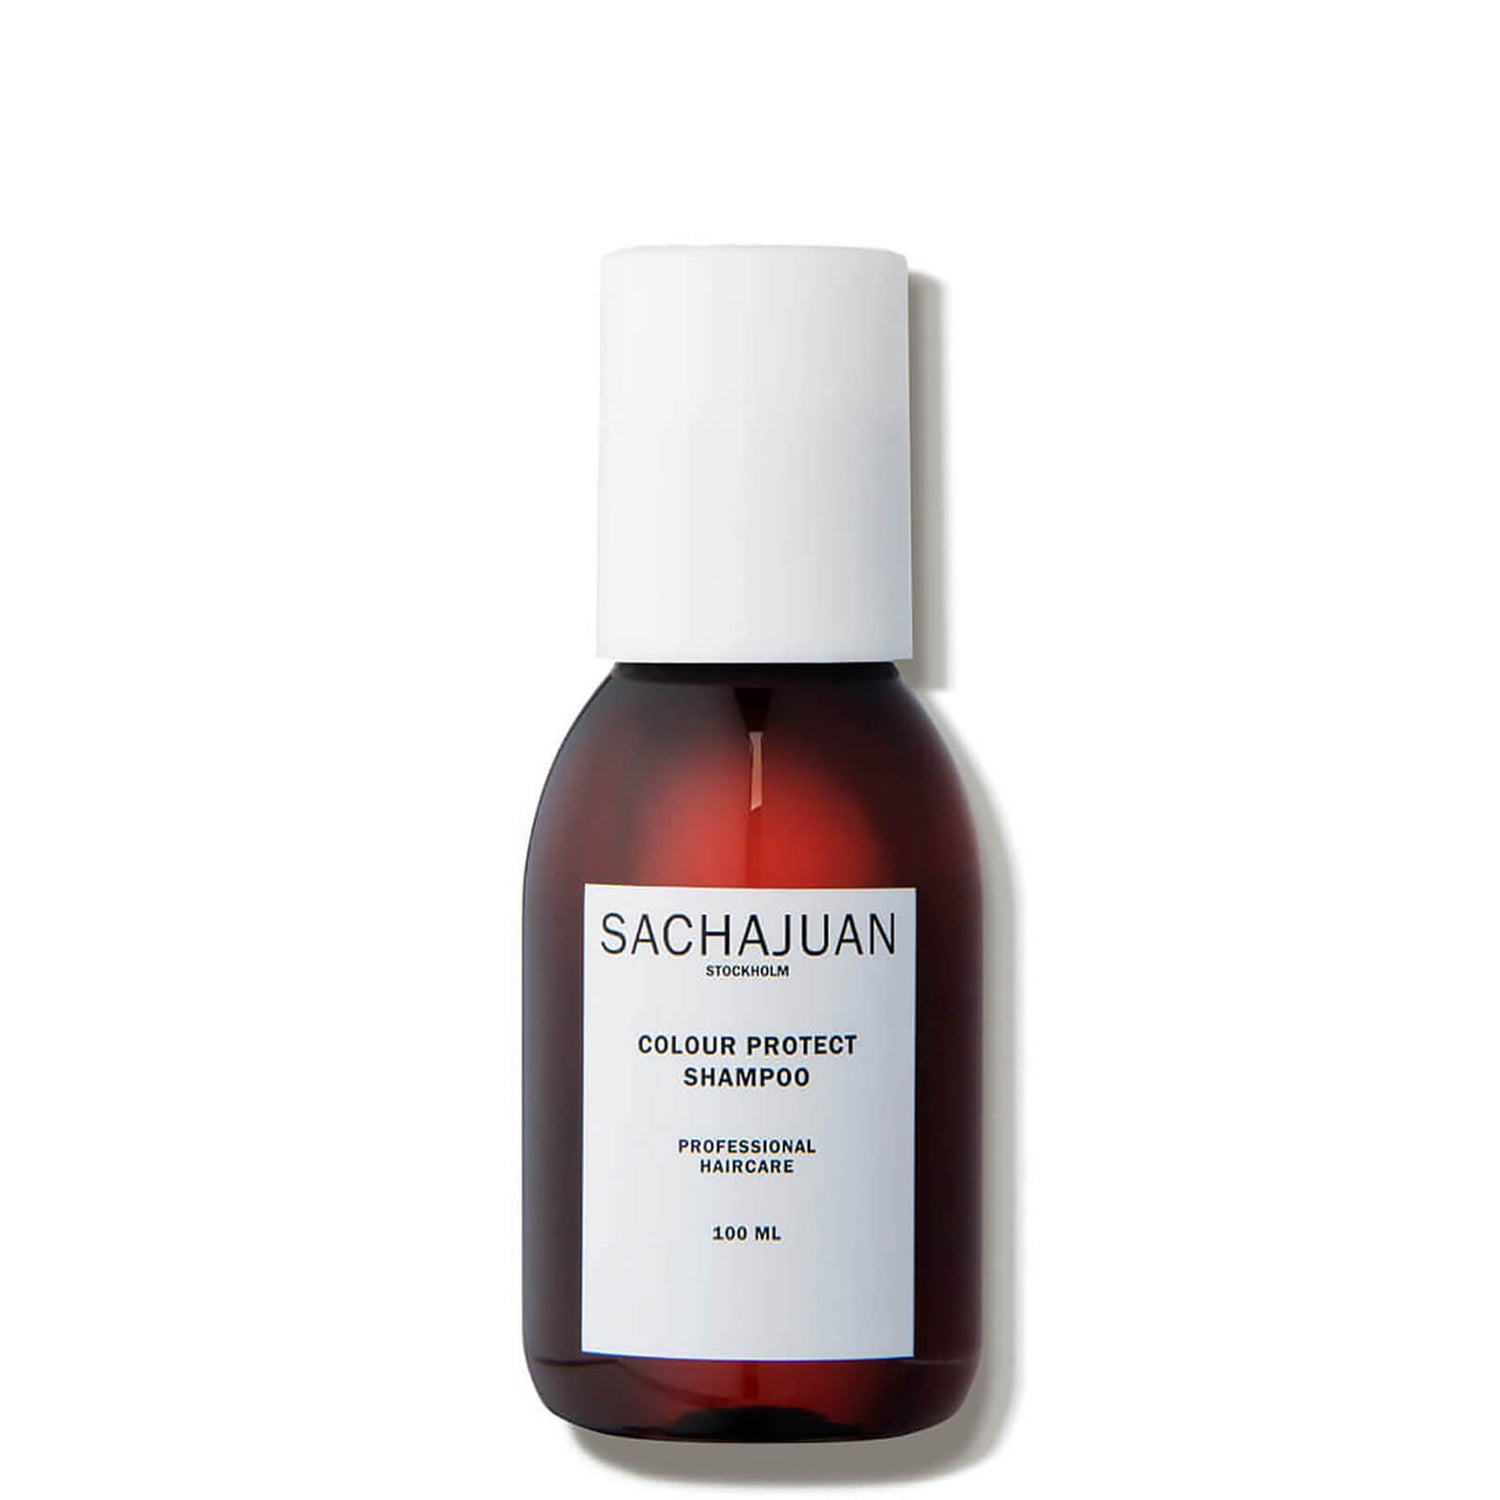 Sachajuan Colour Protect Shampoo Travel Size 100ml